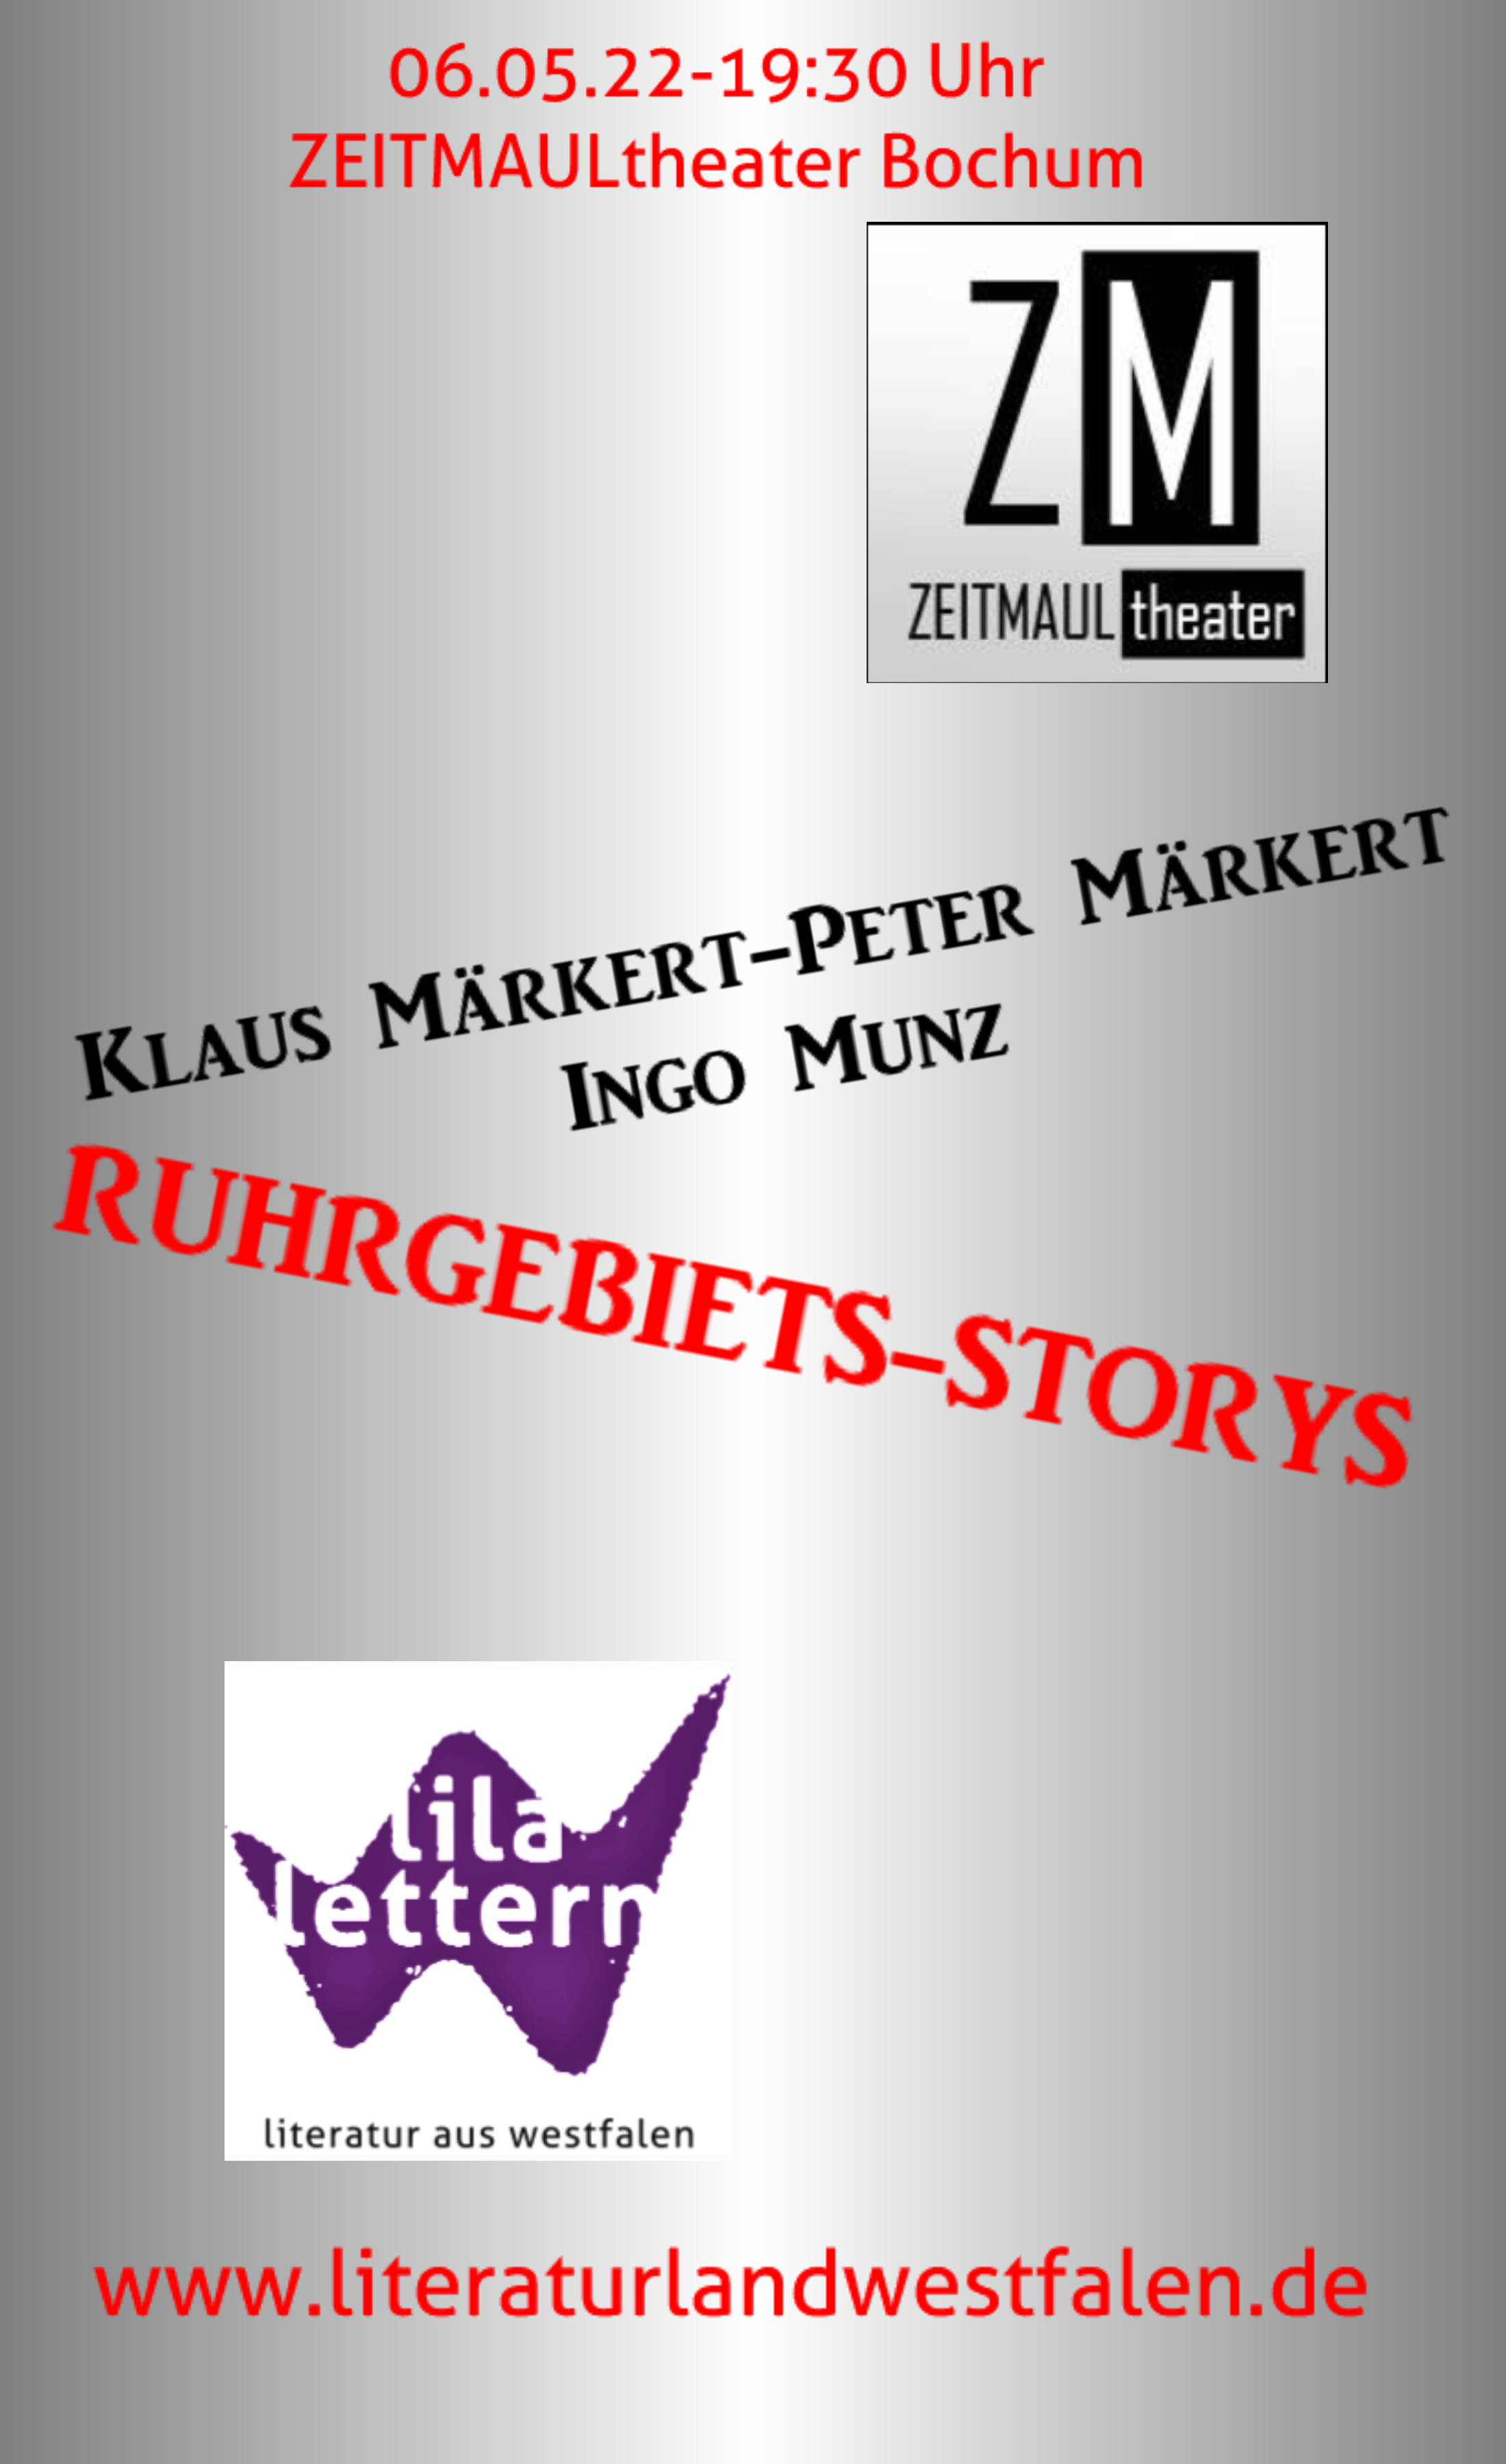 Ruhrgebietsstorys: Klaus Märkert, Peter Märkert, Ingo Munz